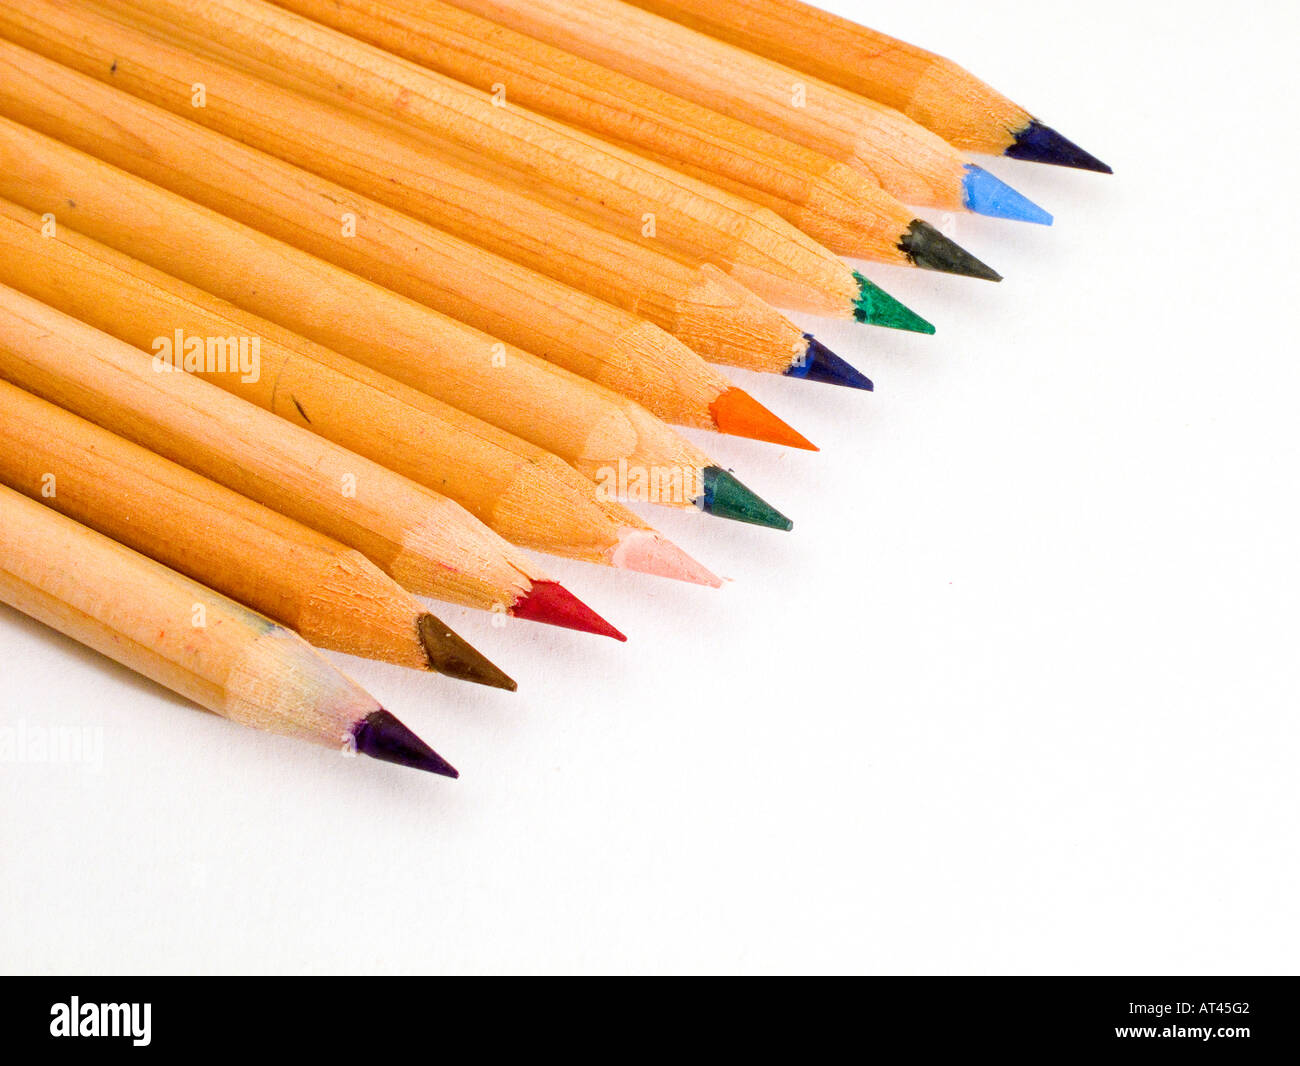 Line of coloured pencils Stock Photo